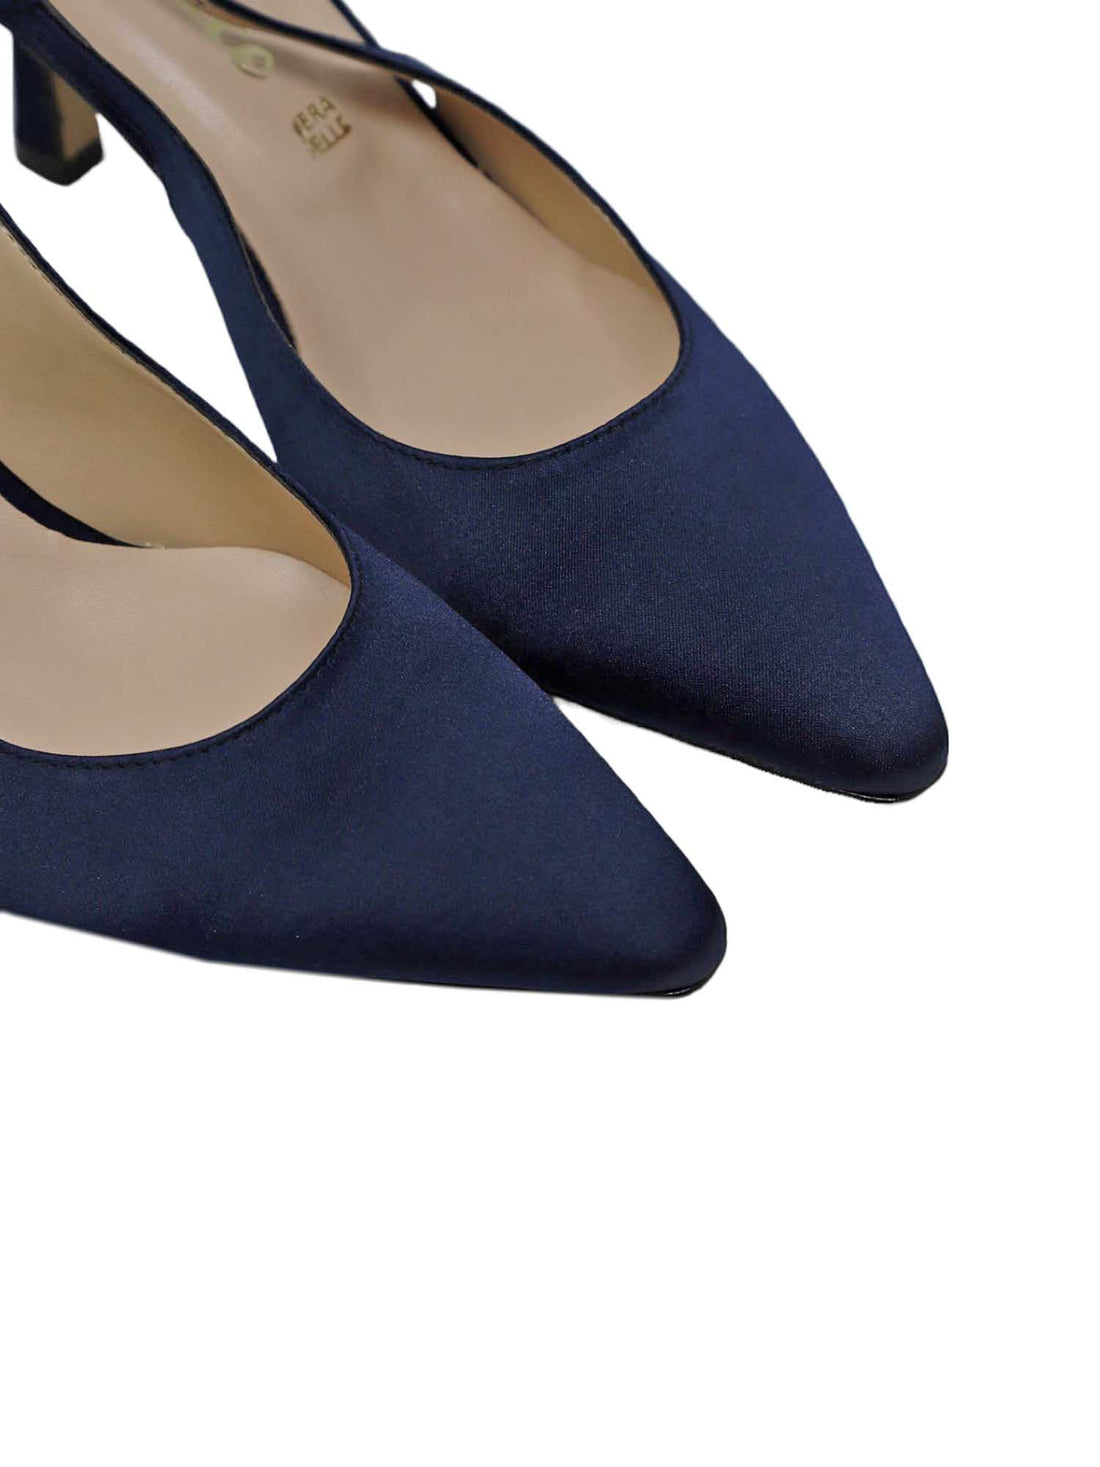 Sandali tacco Blu Grace Shoes